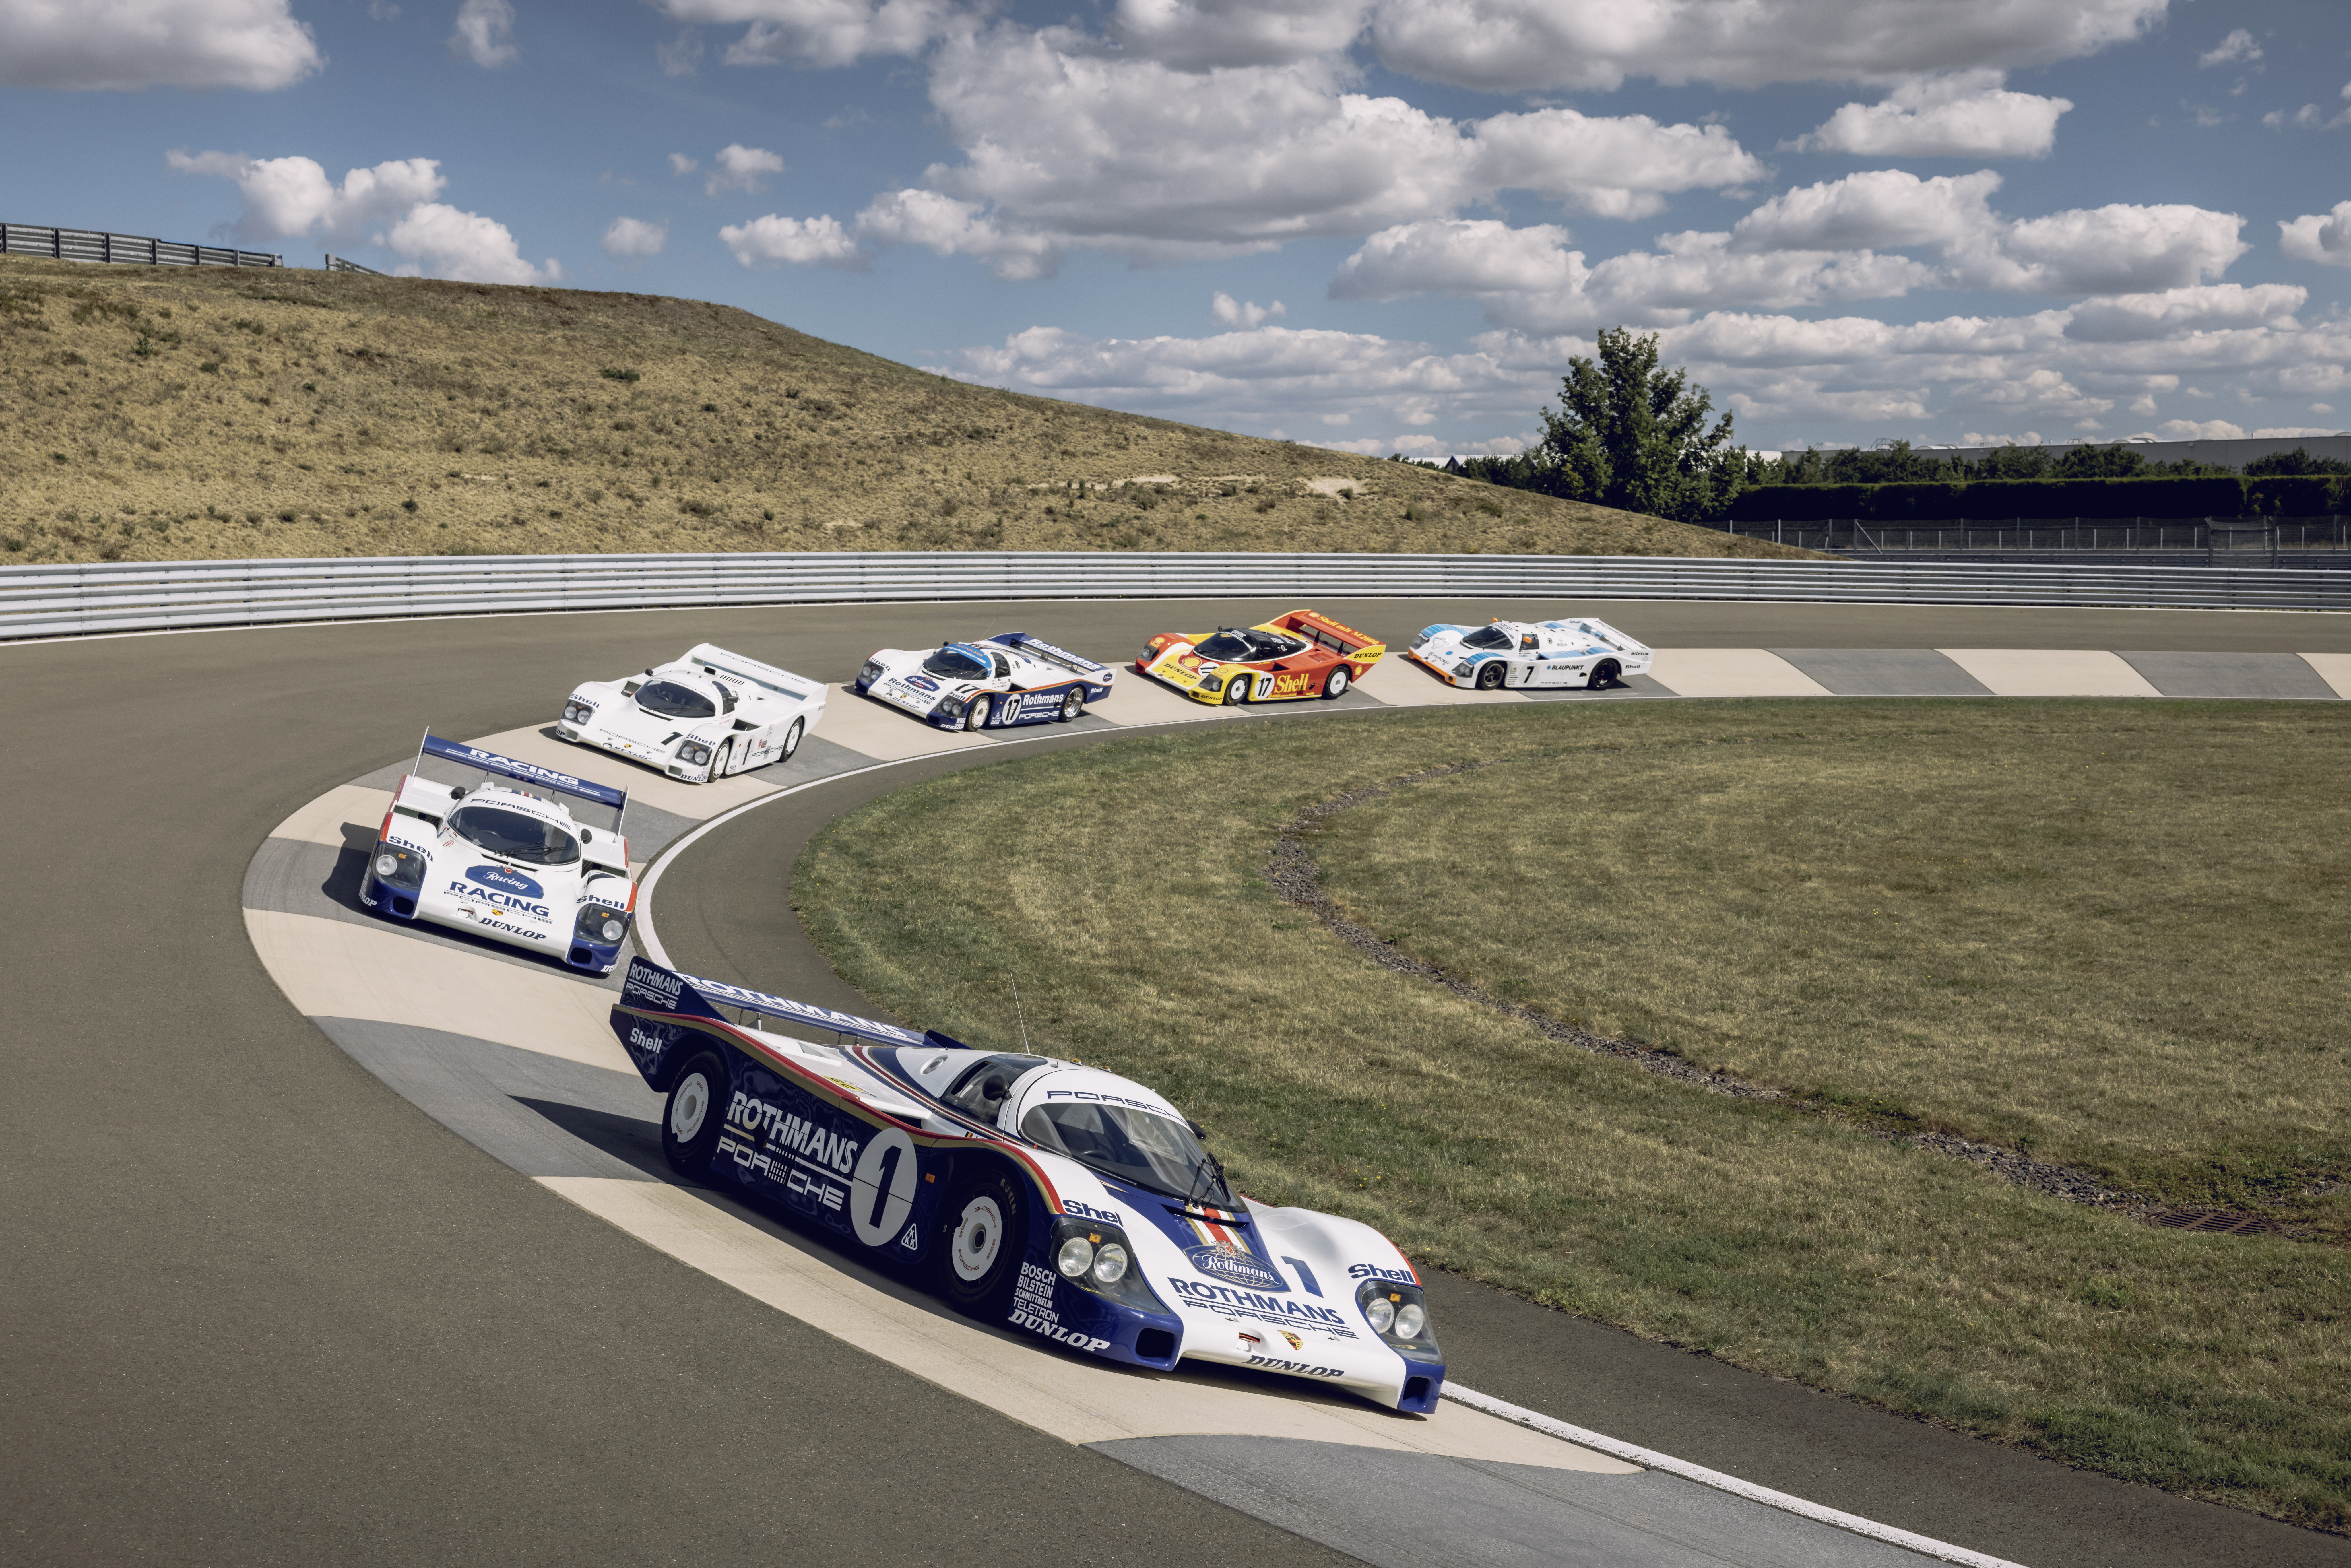 Group C Porsche cars cornering at a racetrack